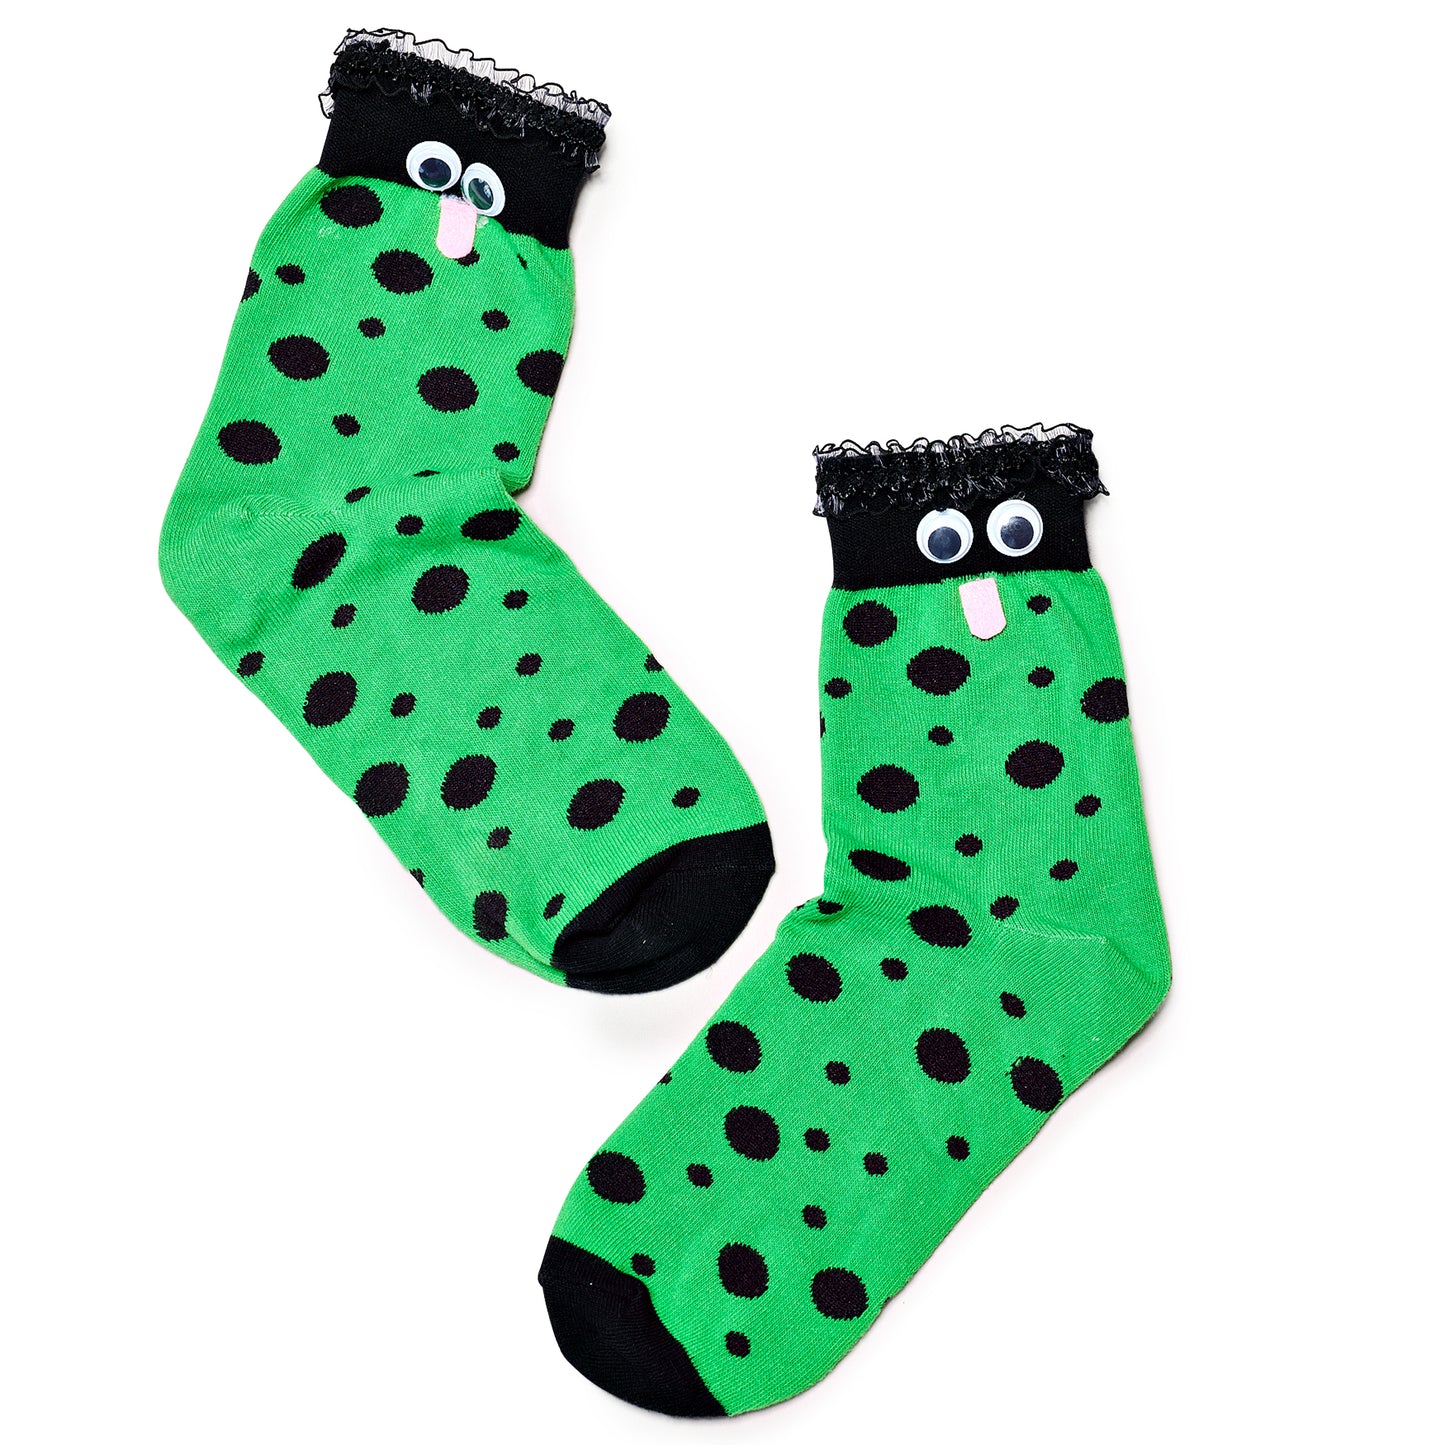 Cheeky Frog Socks - Accessories - KOI Footwear - Green - Side View